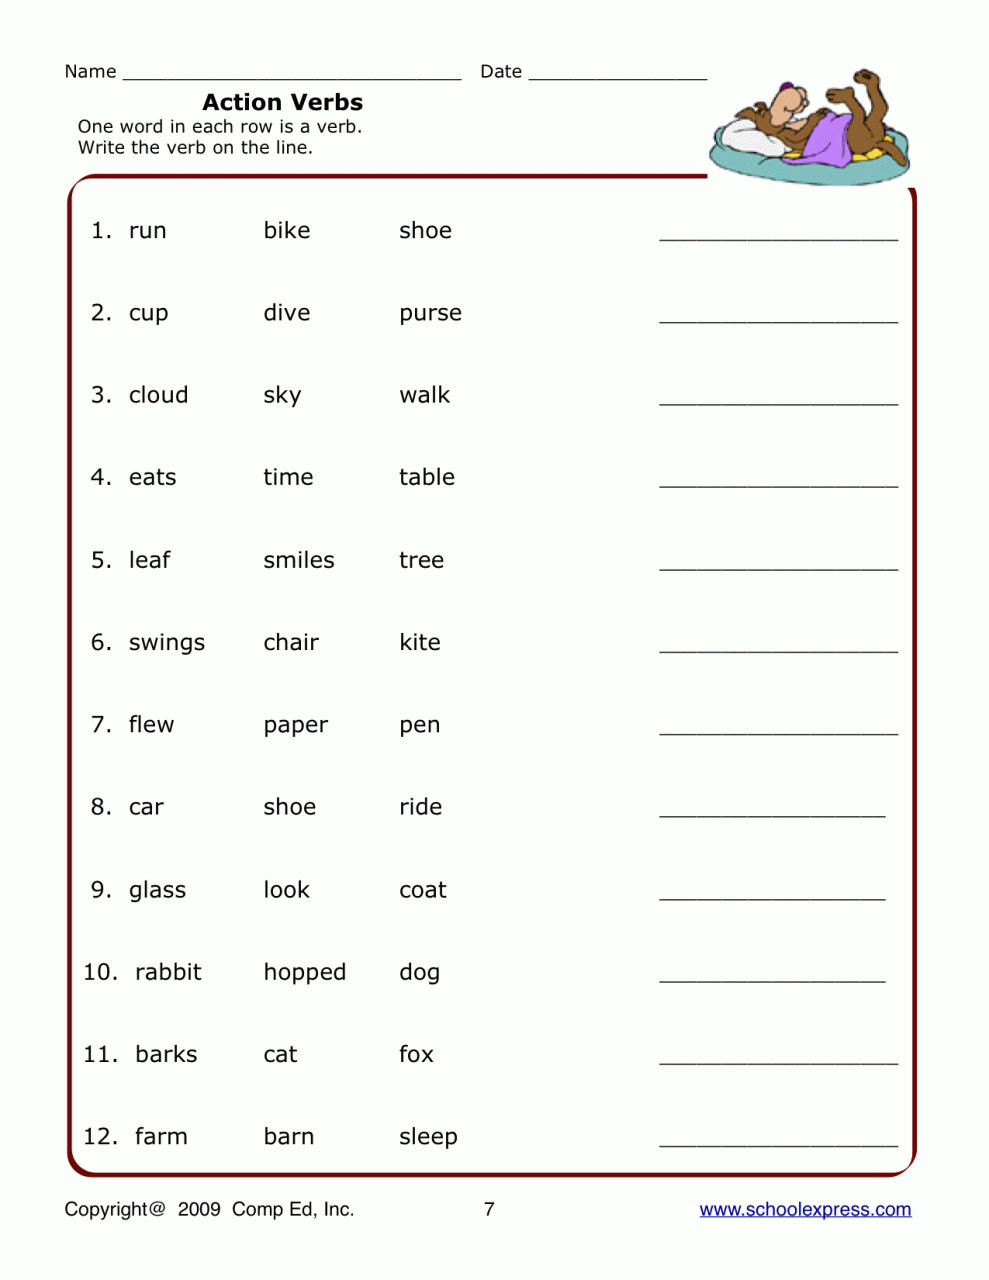 Action Verbs Worksheet For Grade 2